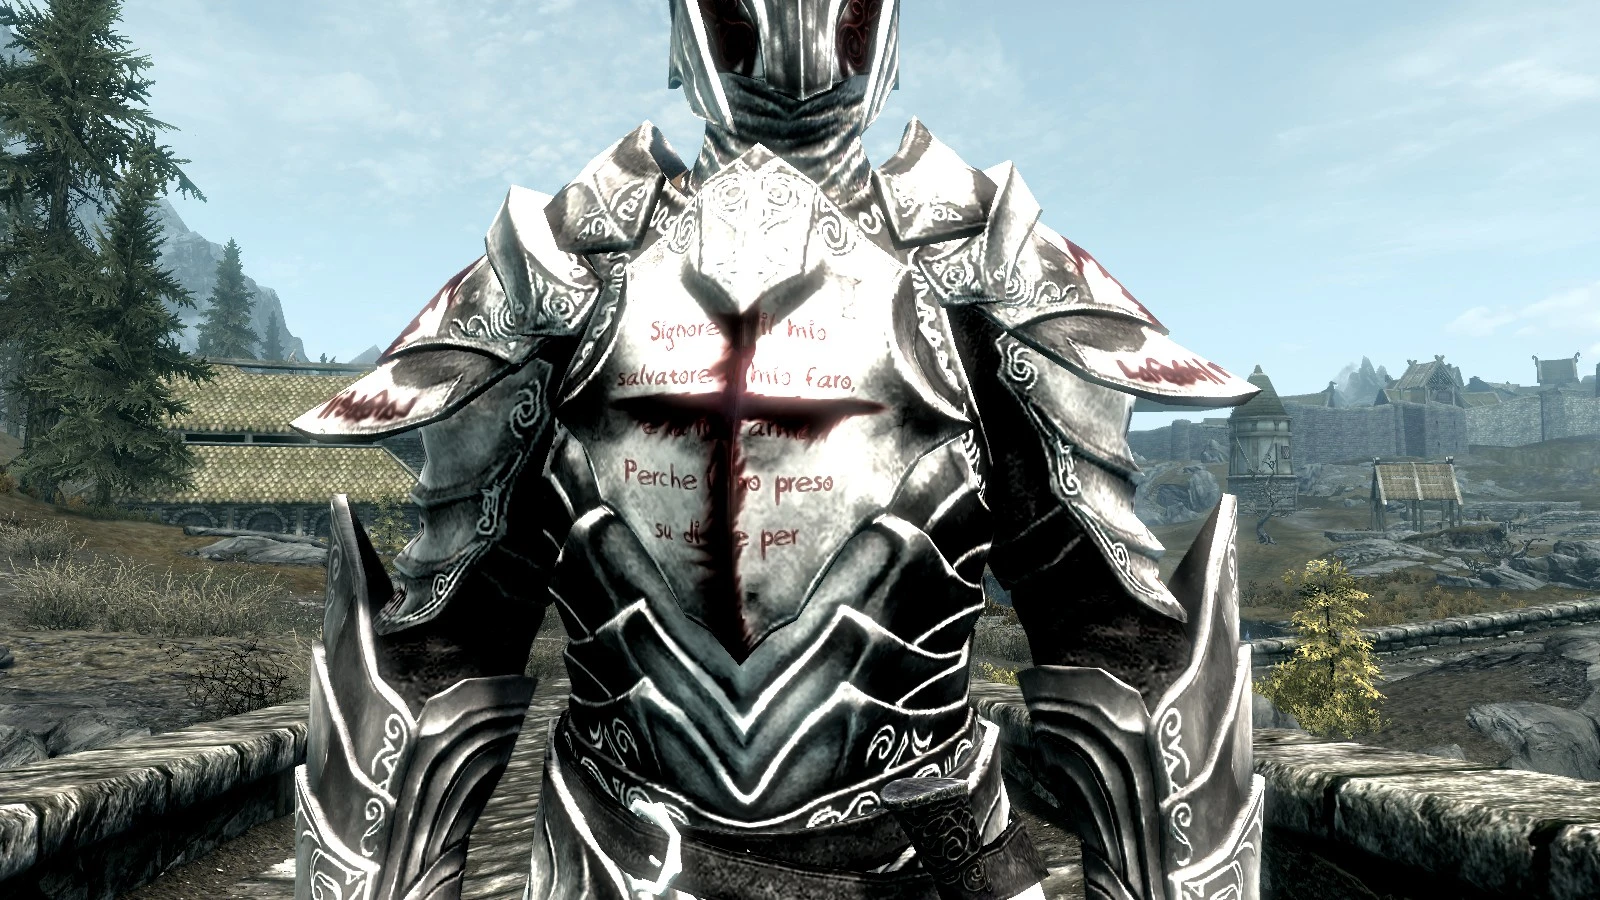 skyrim wallpaper with ebony armor at skyrim nexus mods and community.